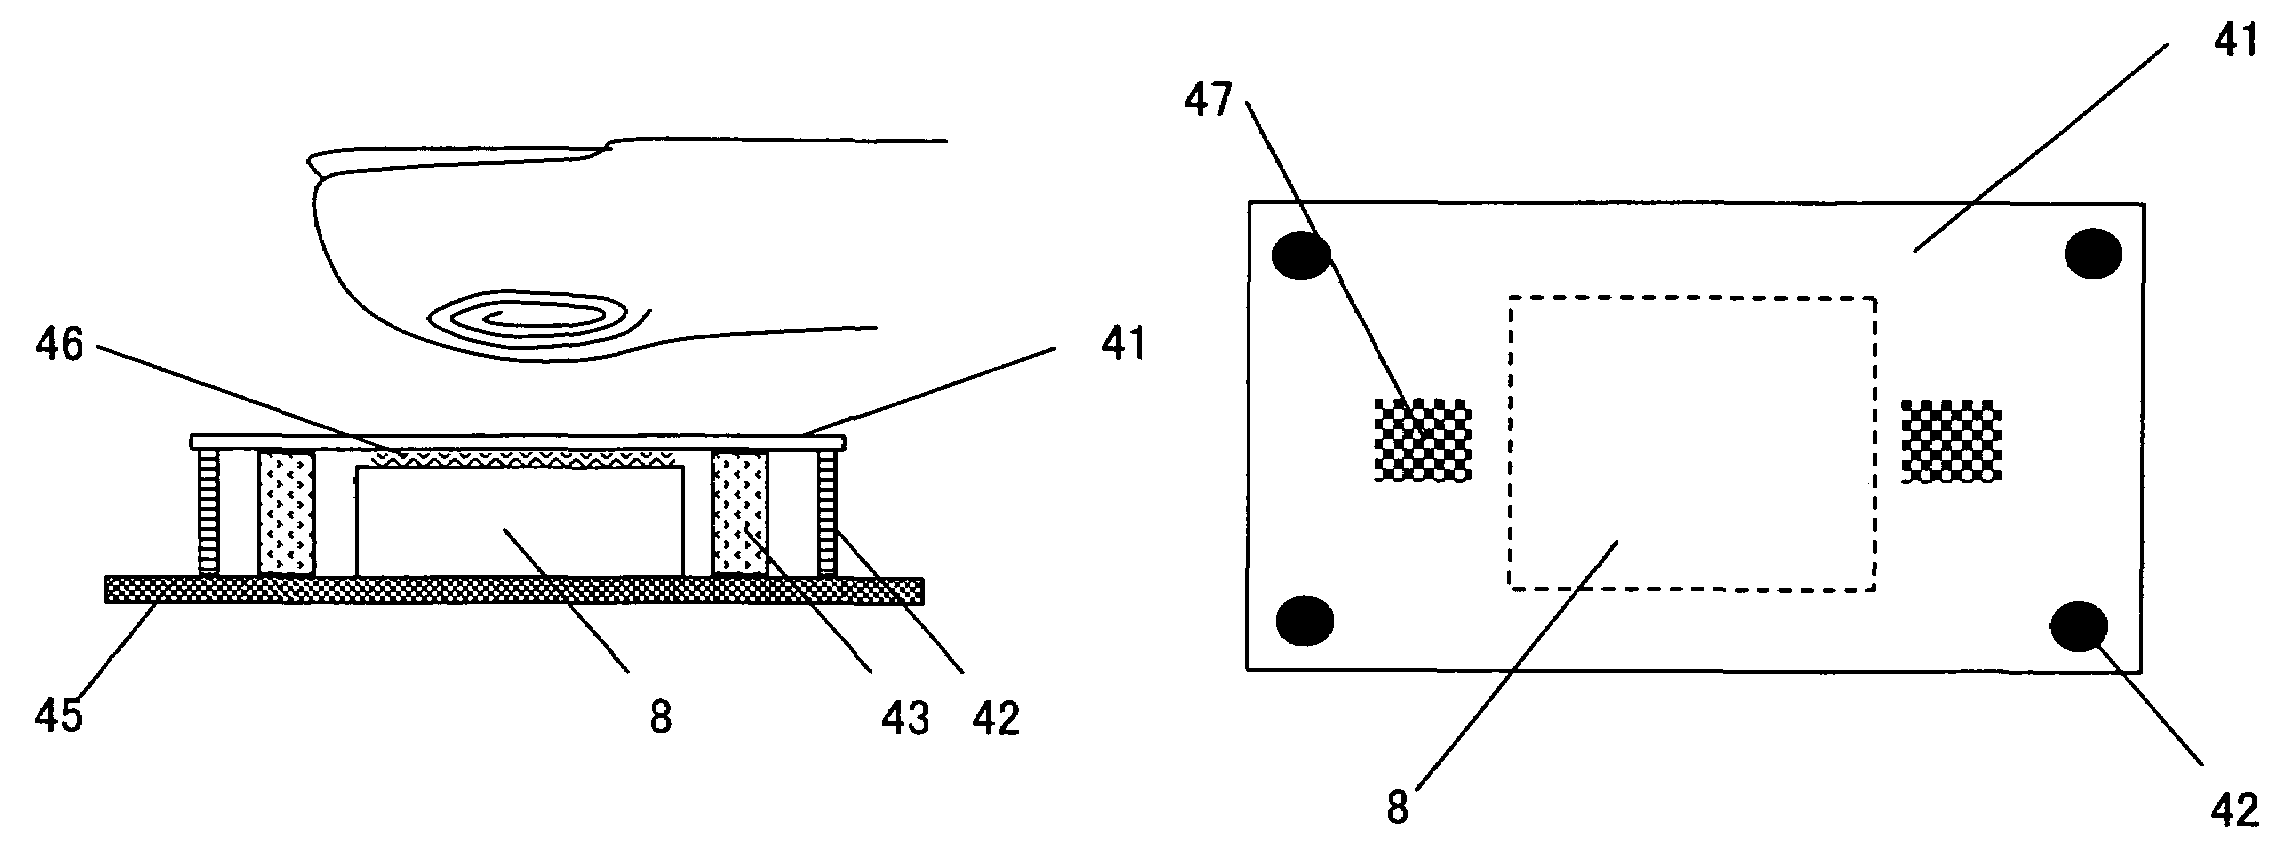 Detection of fingerprint distortion by deformation of elastic film or displacement of transparent board